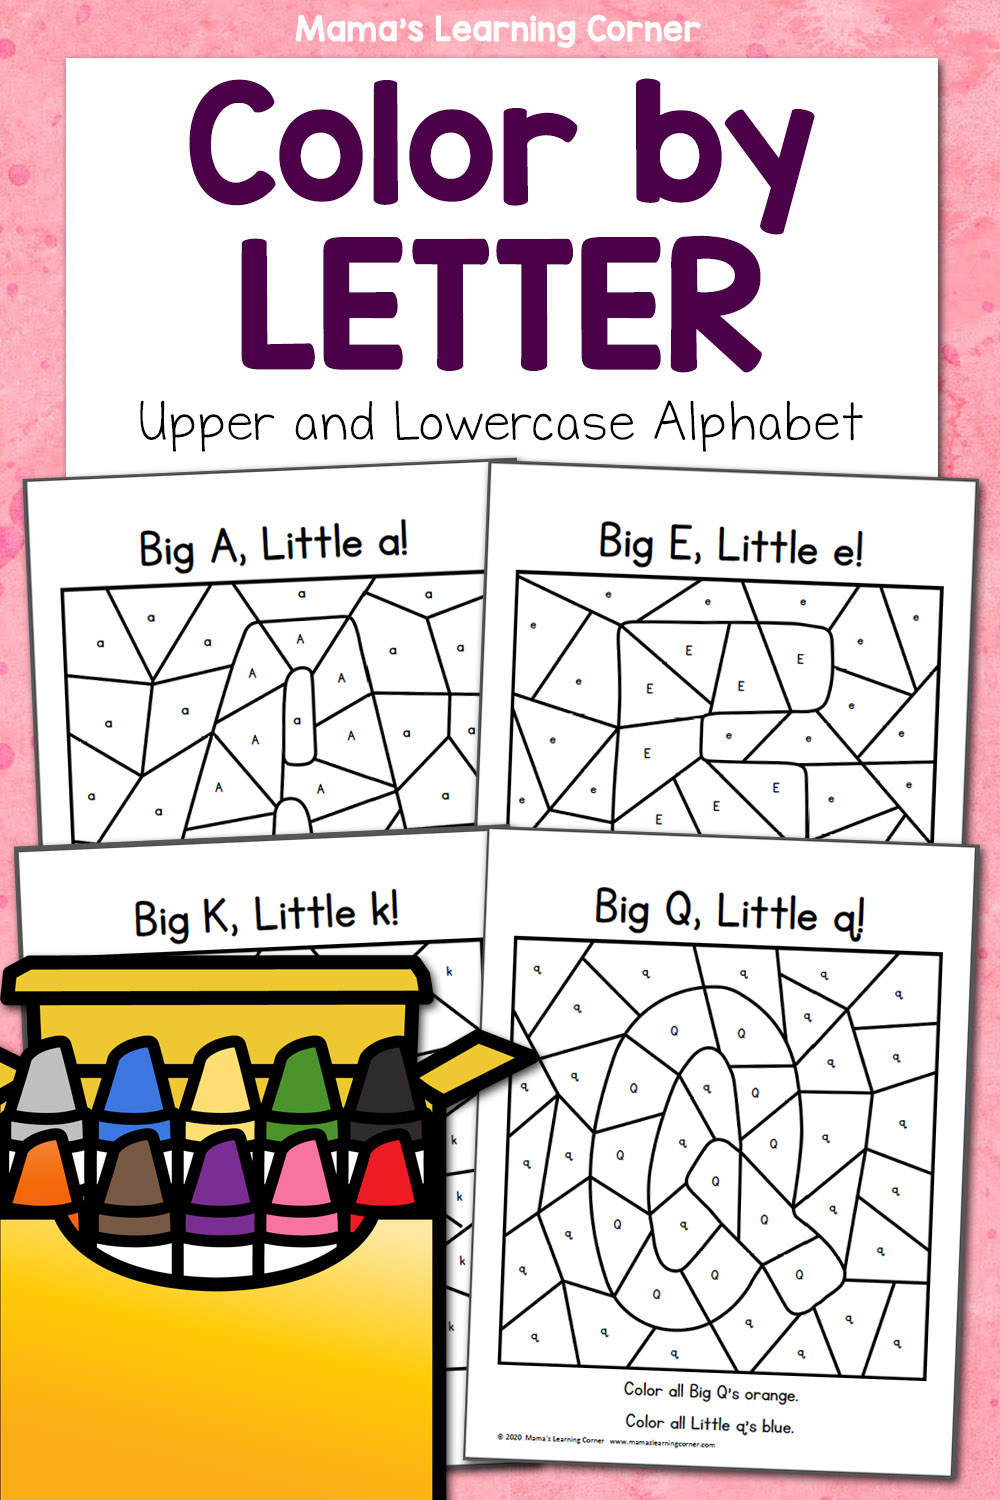 Color by Letter Alphabet Worksheets - Mamas Learning Corner